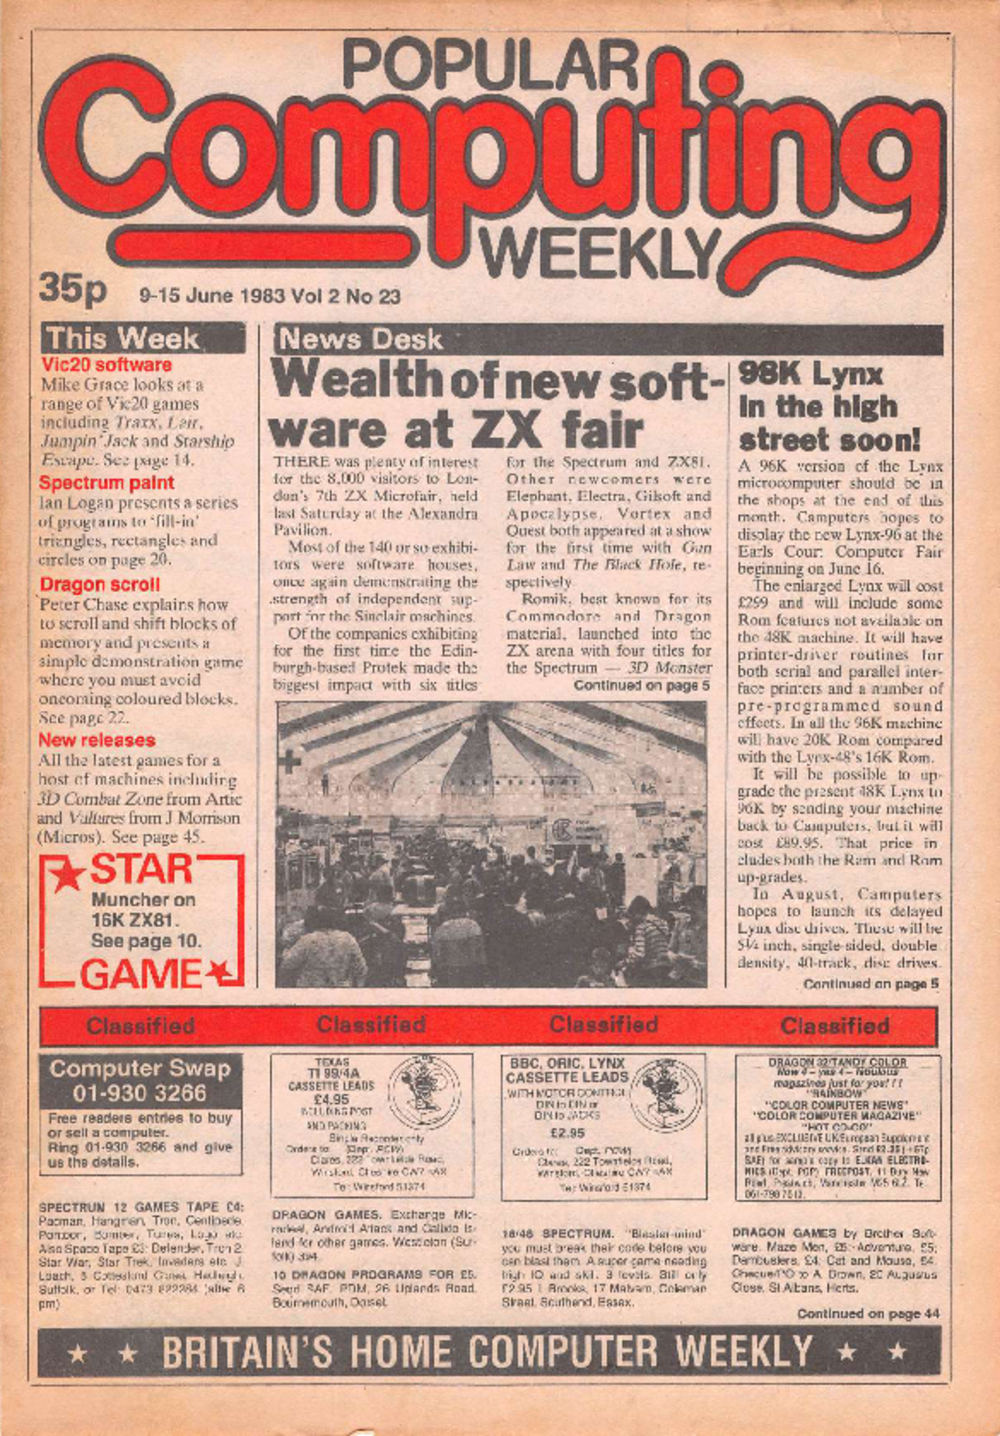 Article: Popular Computing Weekly Vol 2 No 23 - 9-15 June 1983